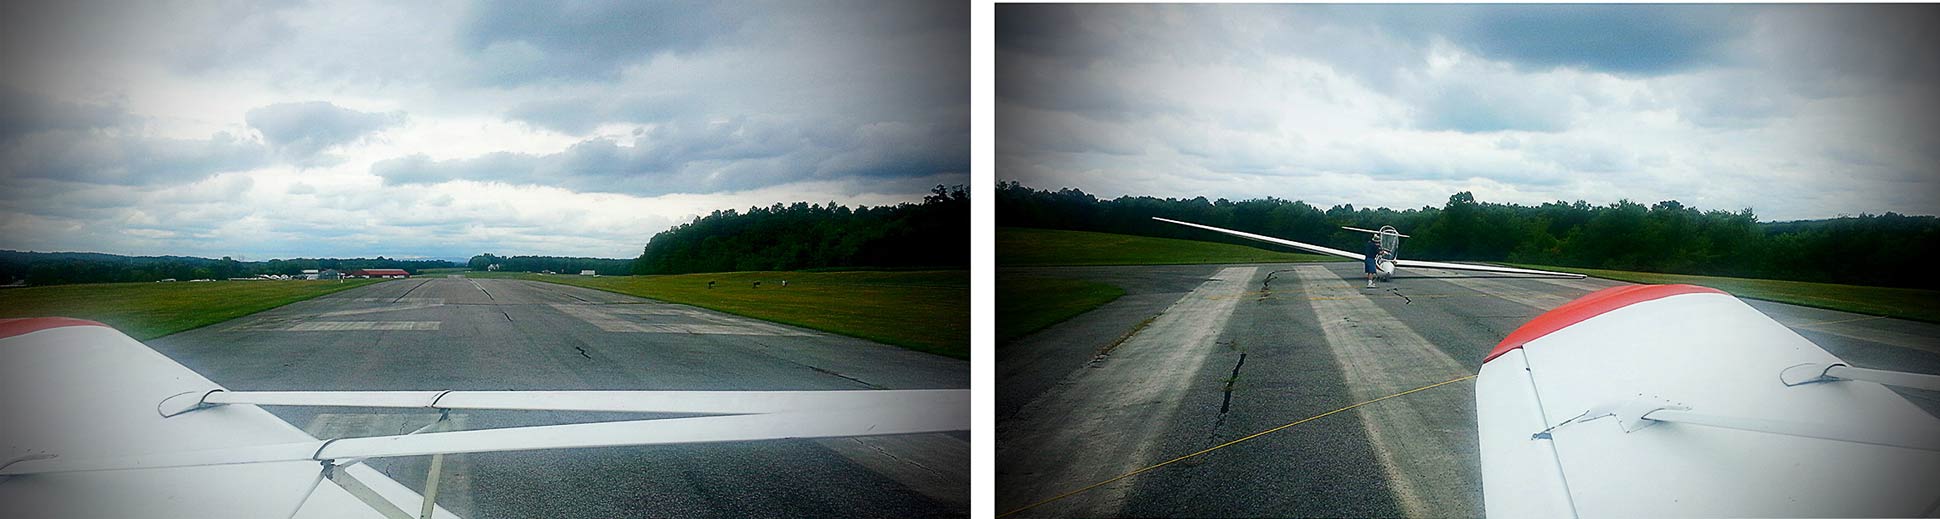 glider towing photo ©2014 bret wills